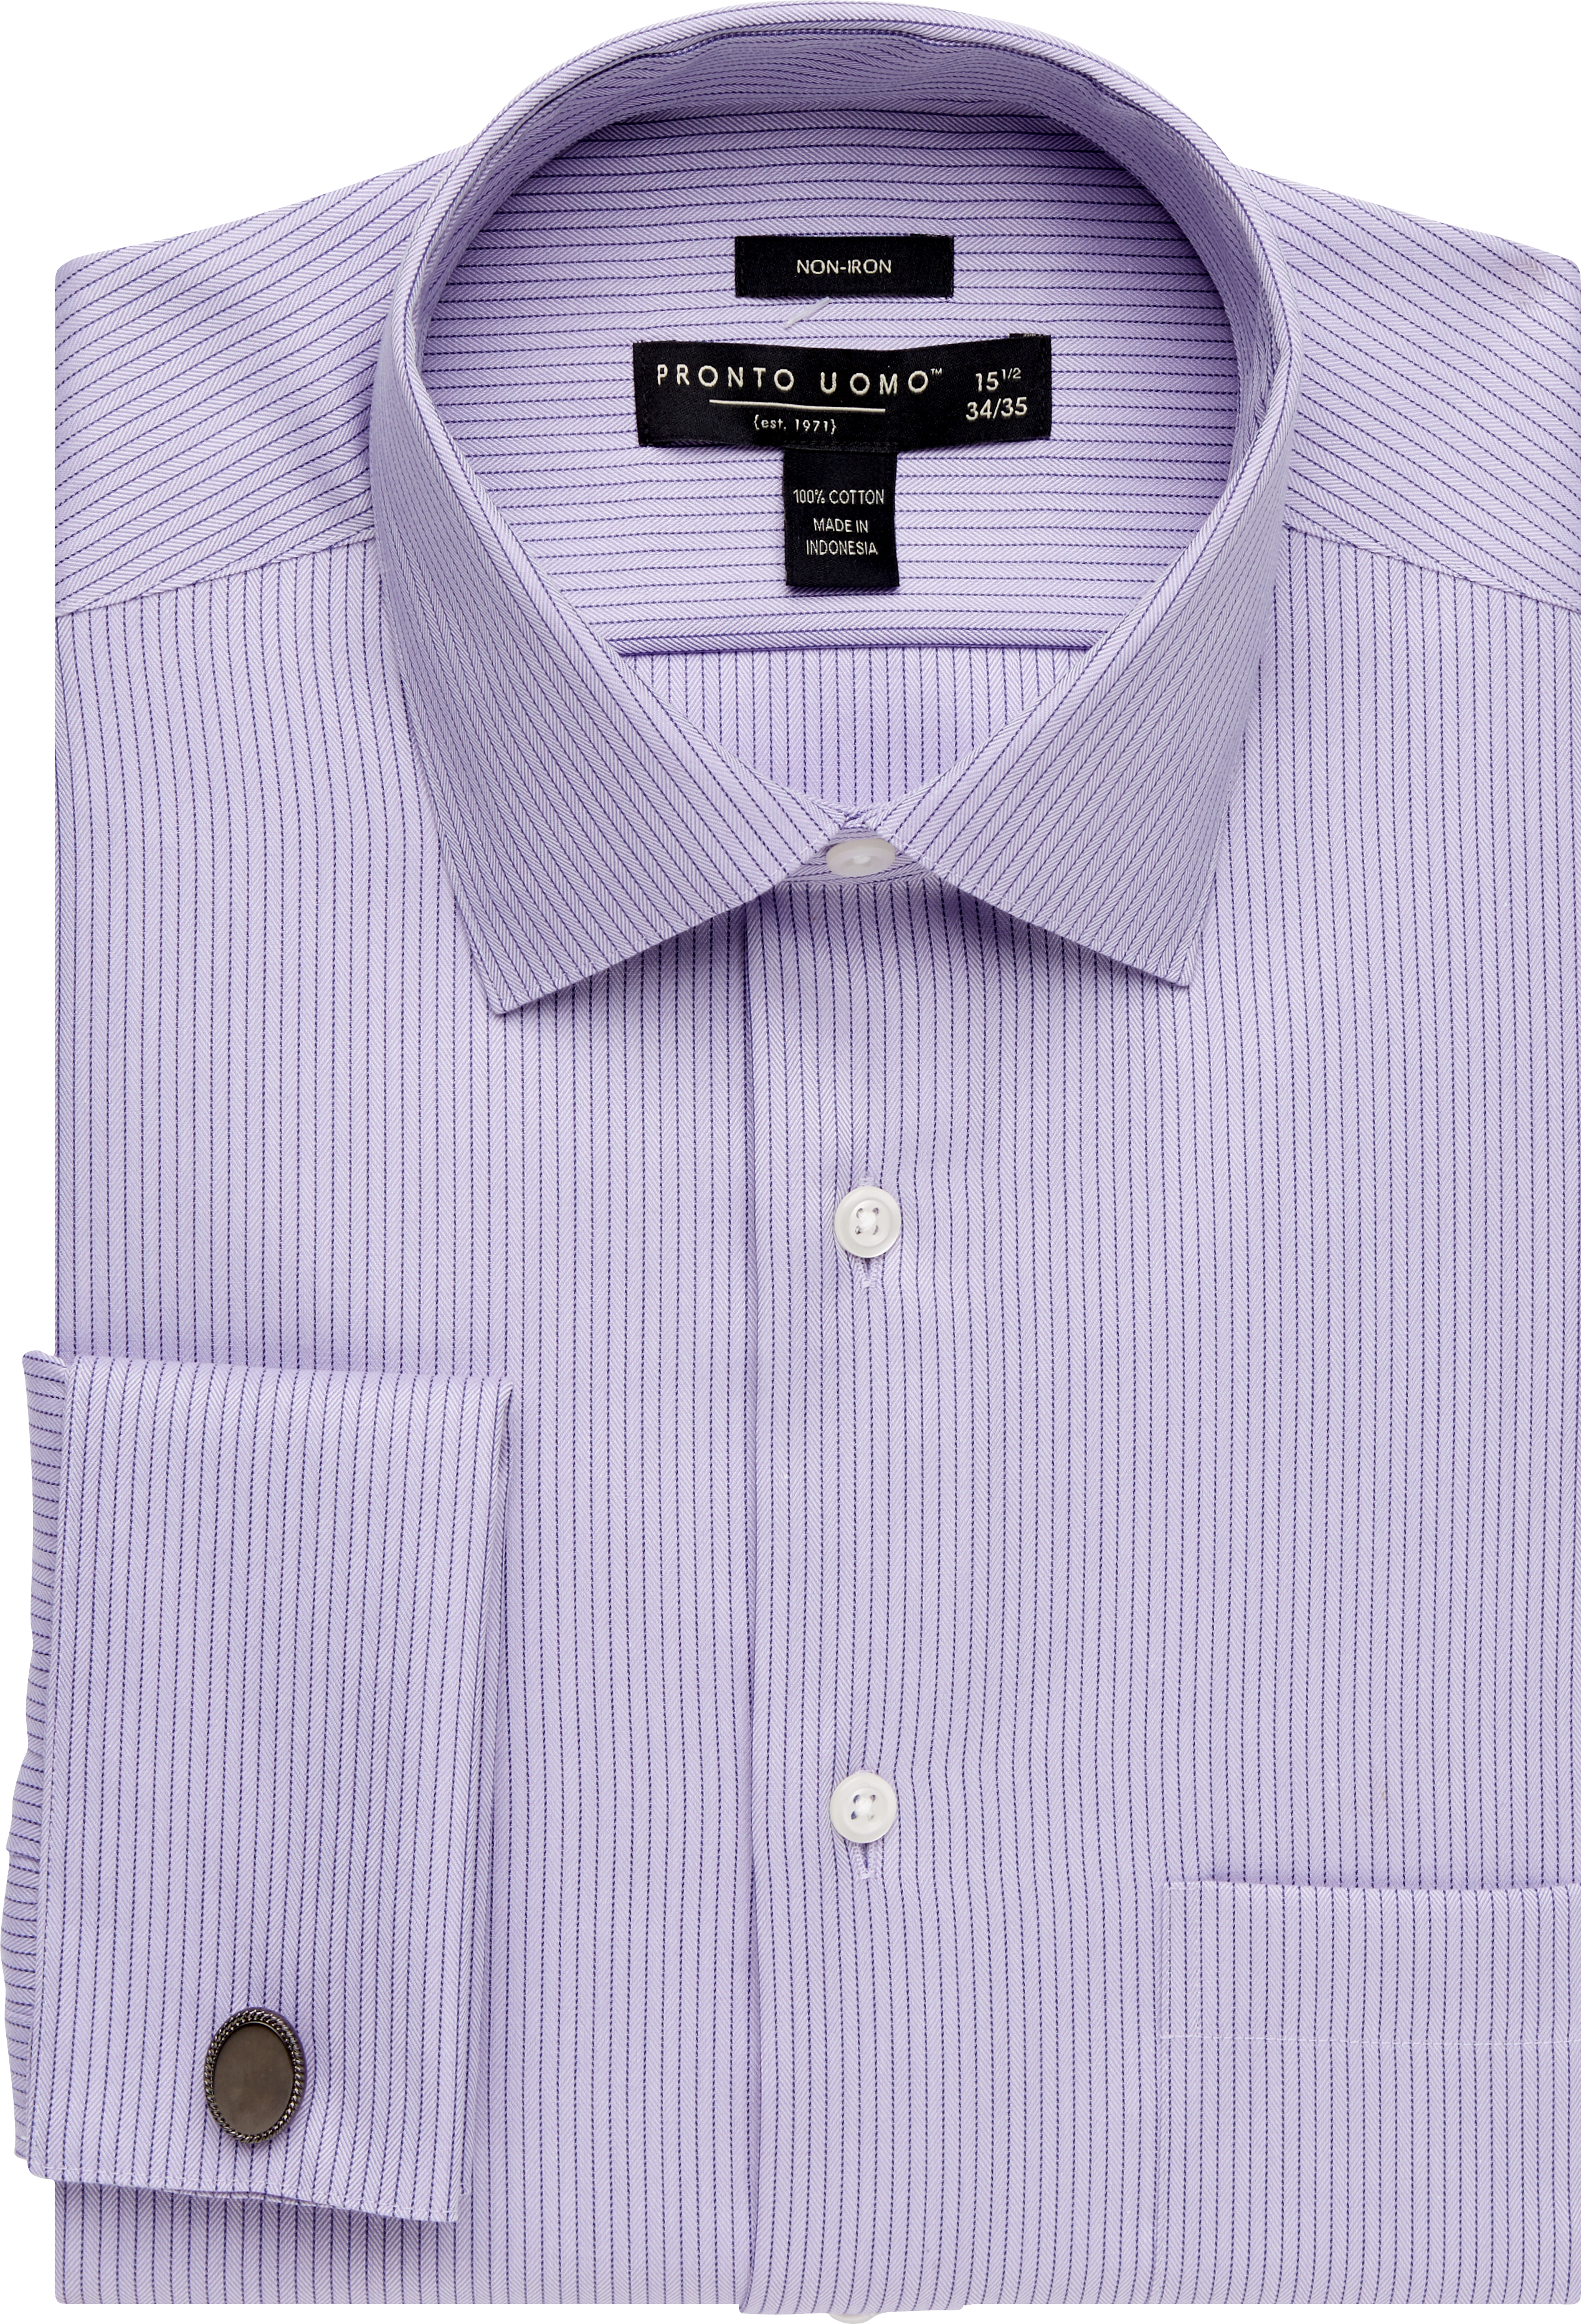 french cuff dress shirts shirt pronto uomo purple stripe mens